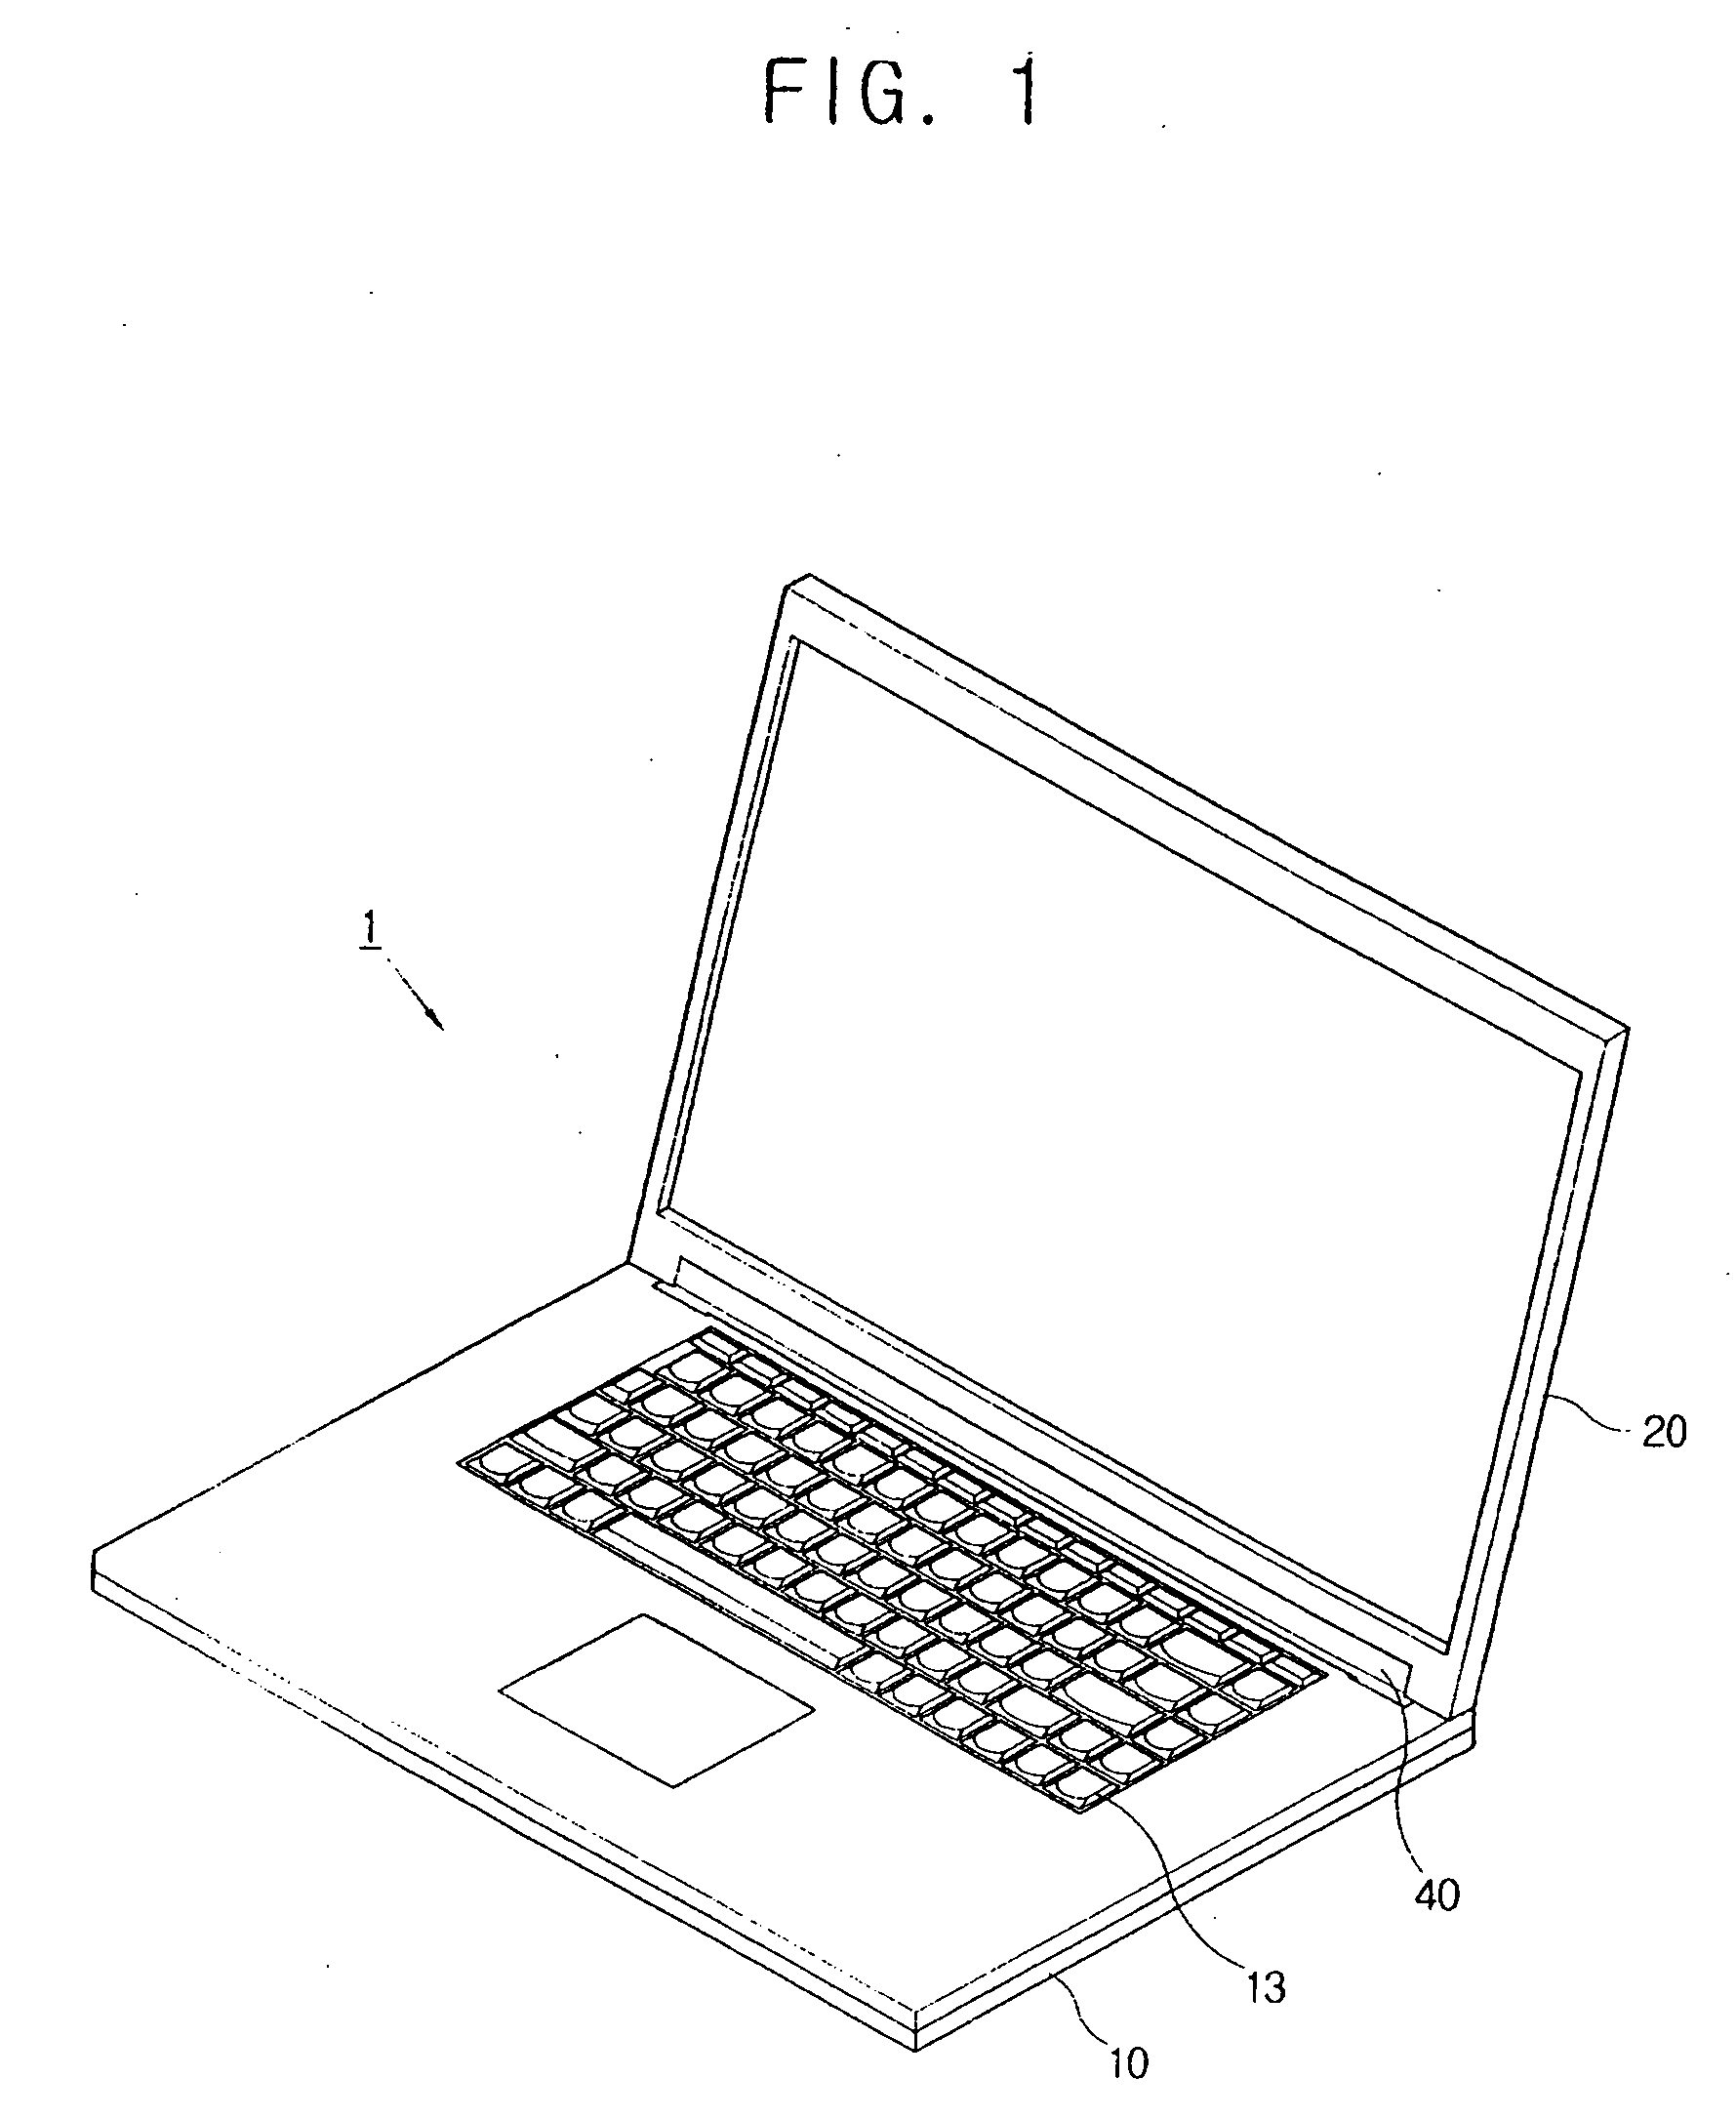 Portable computer with detachable display